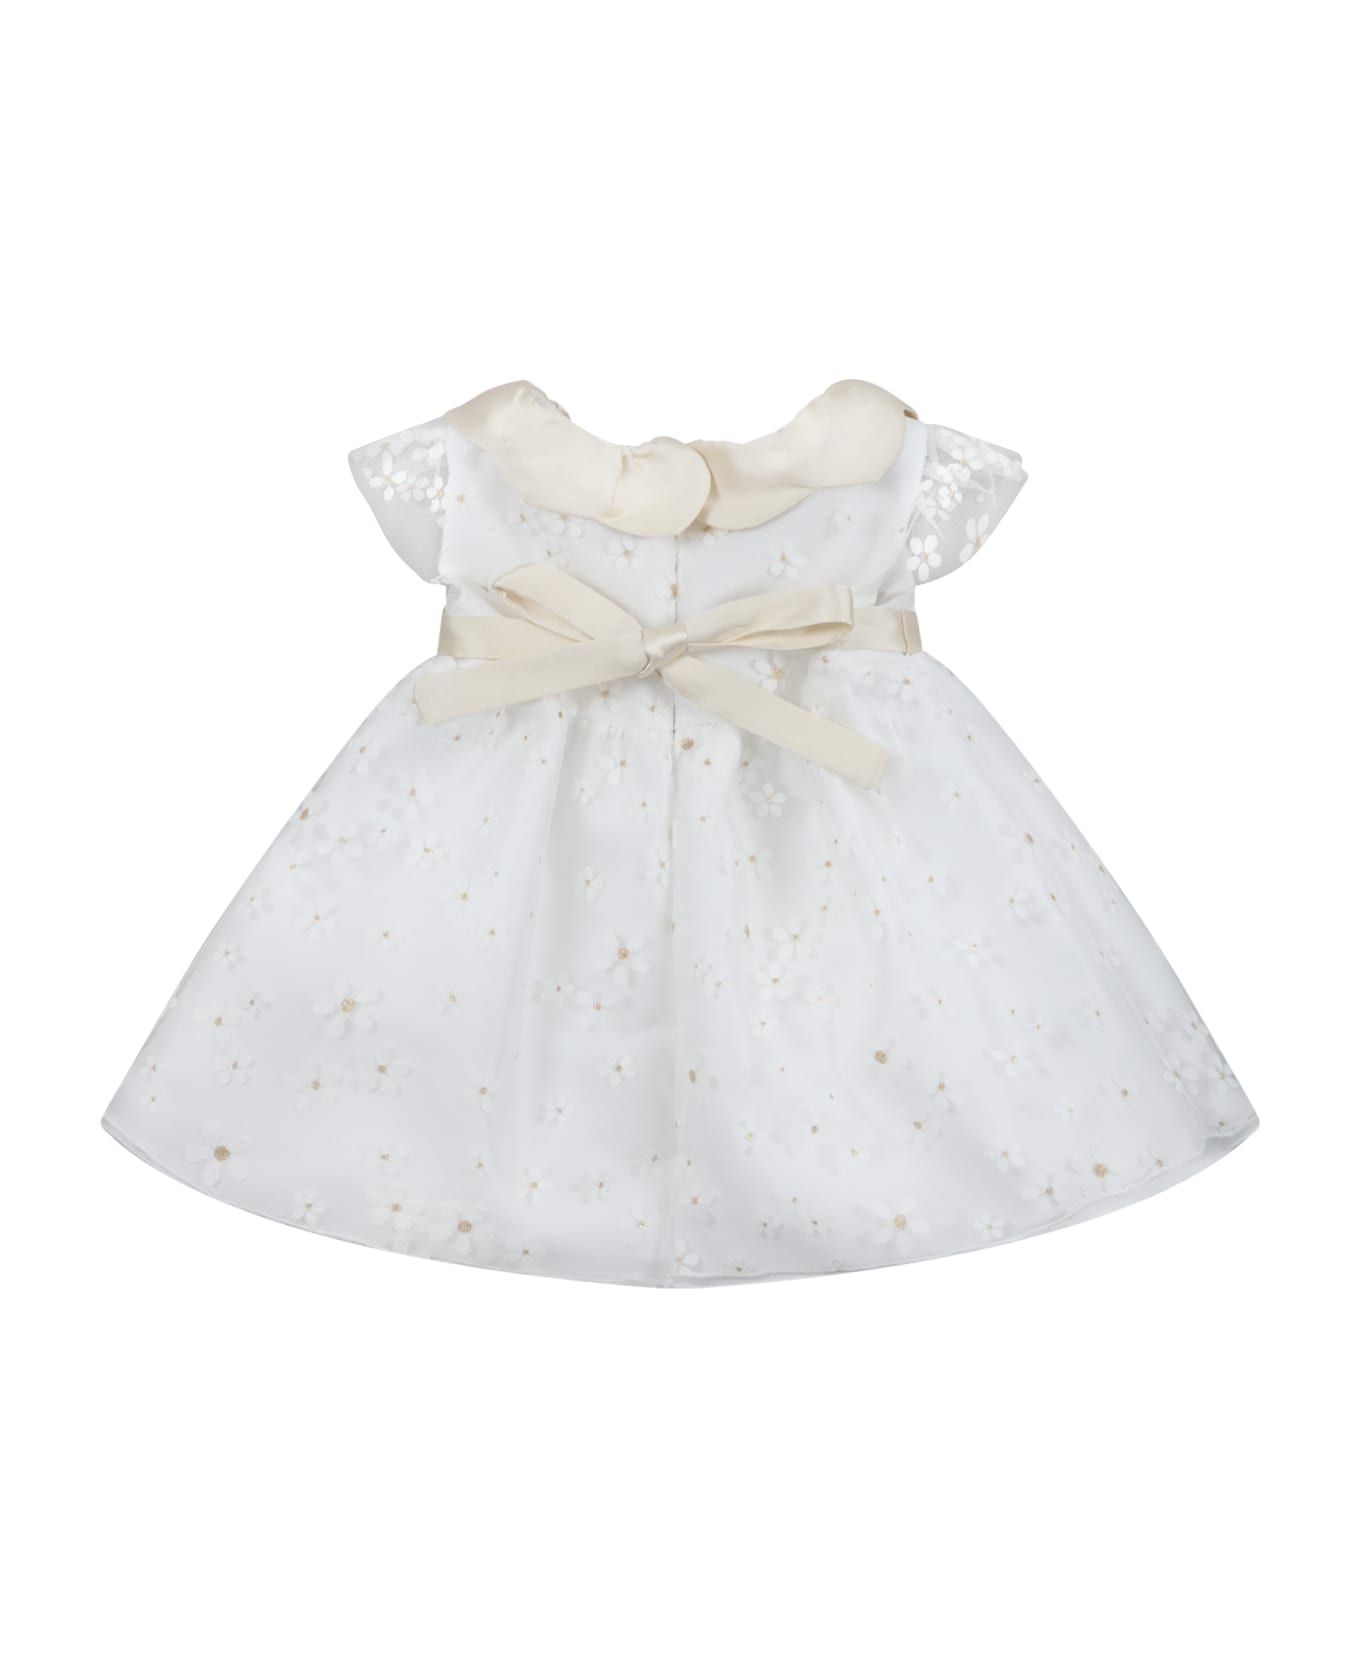 La stupenderia White Sleeveless Dress For Baby Girl With Daisies - White